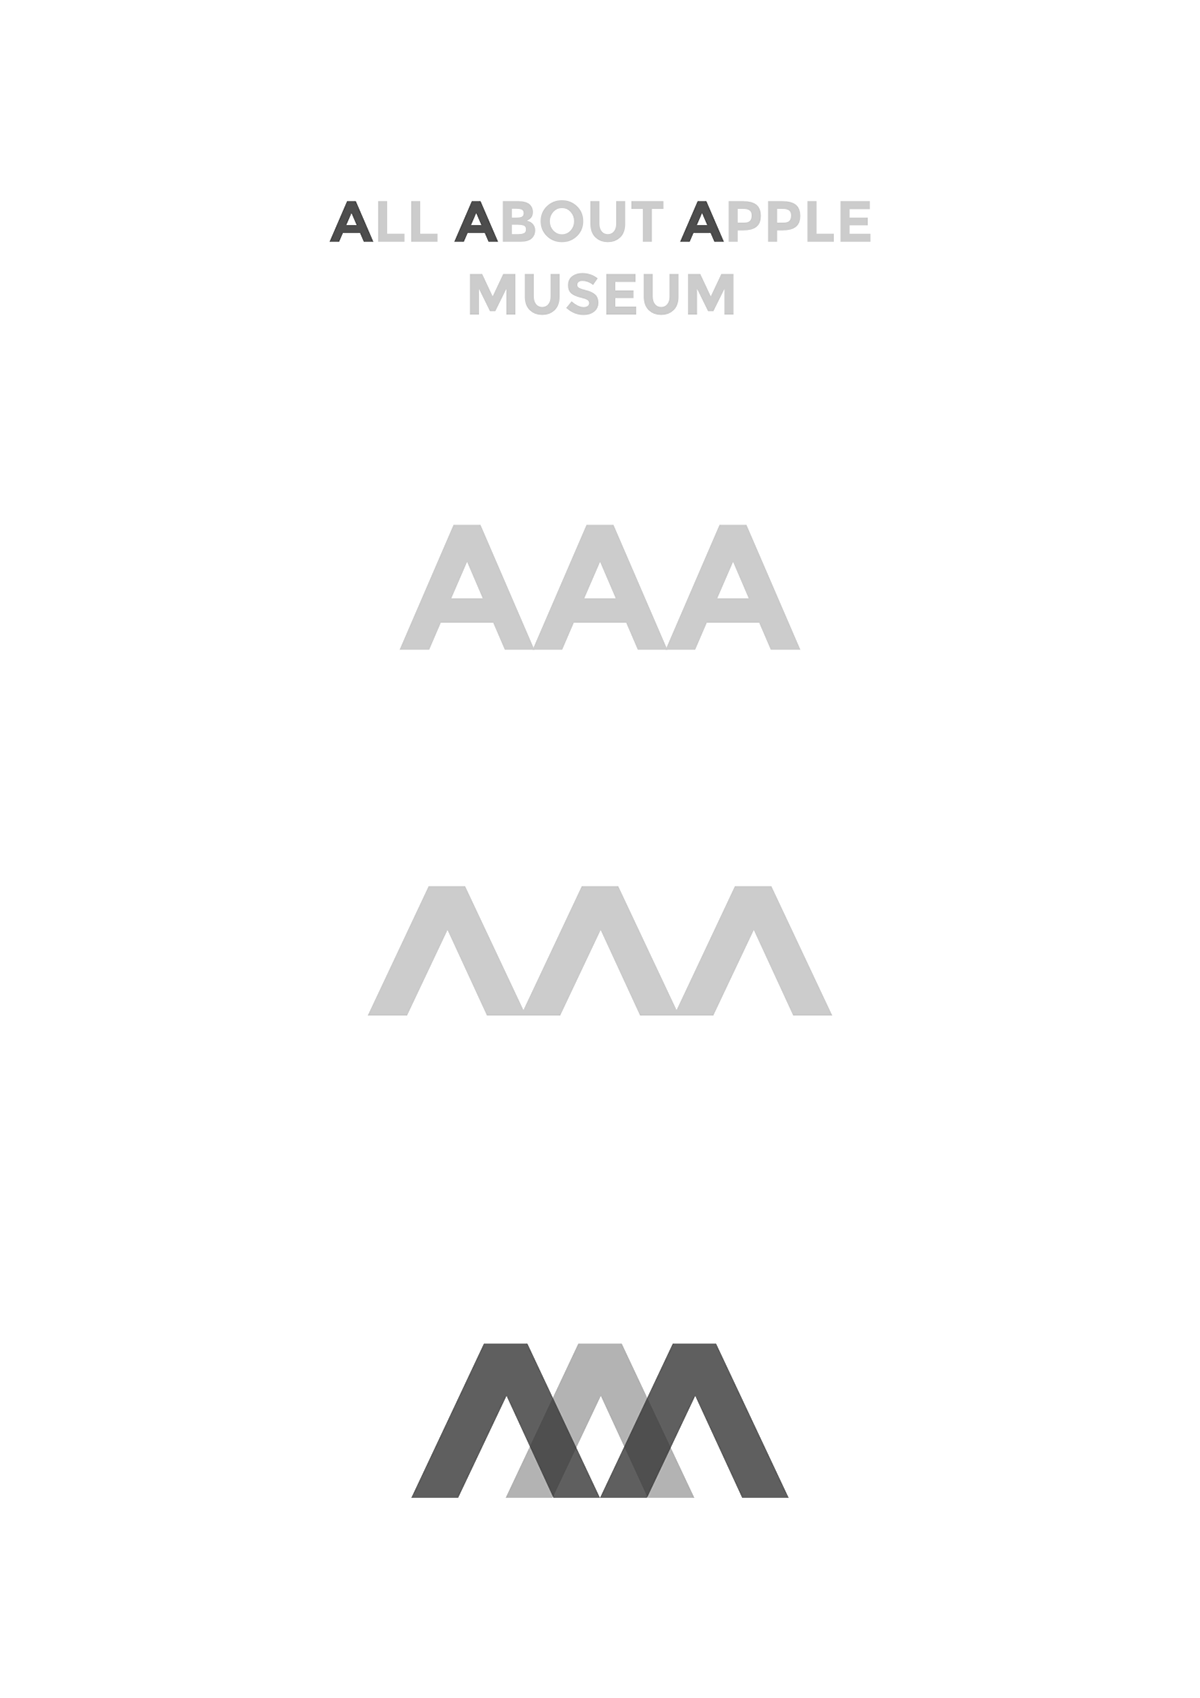 logo apple museum Dynamic museo moderno modern dinámico aaamuseum AAA brand brand identity